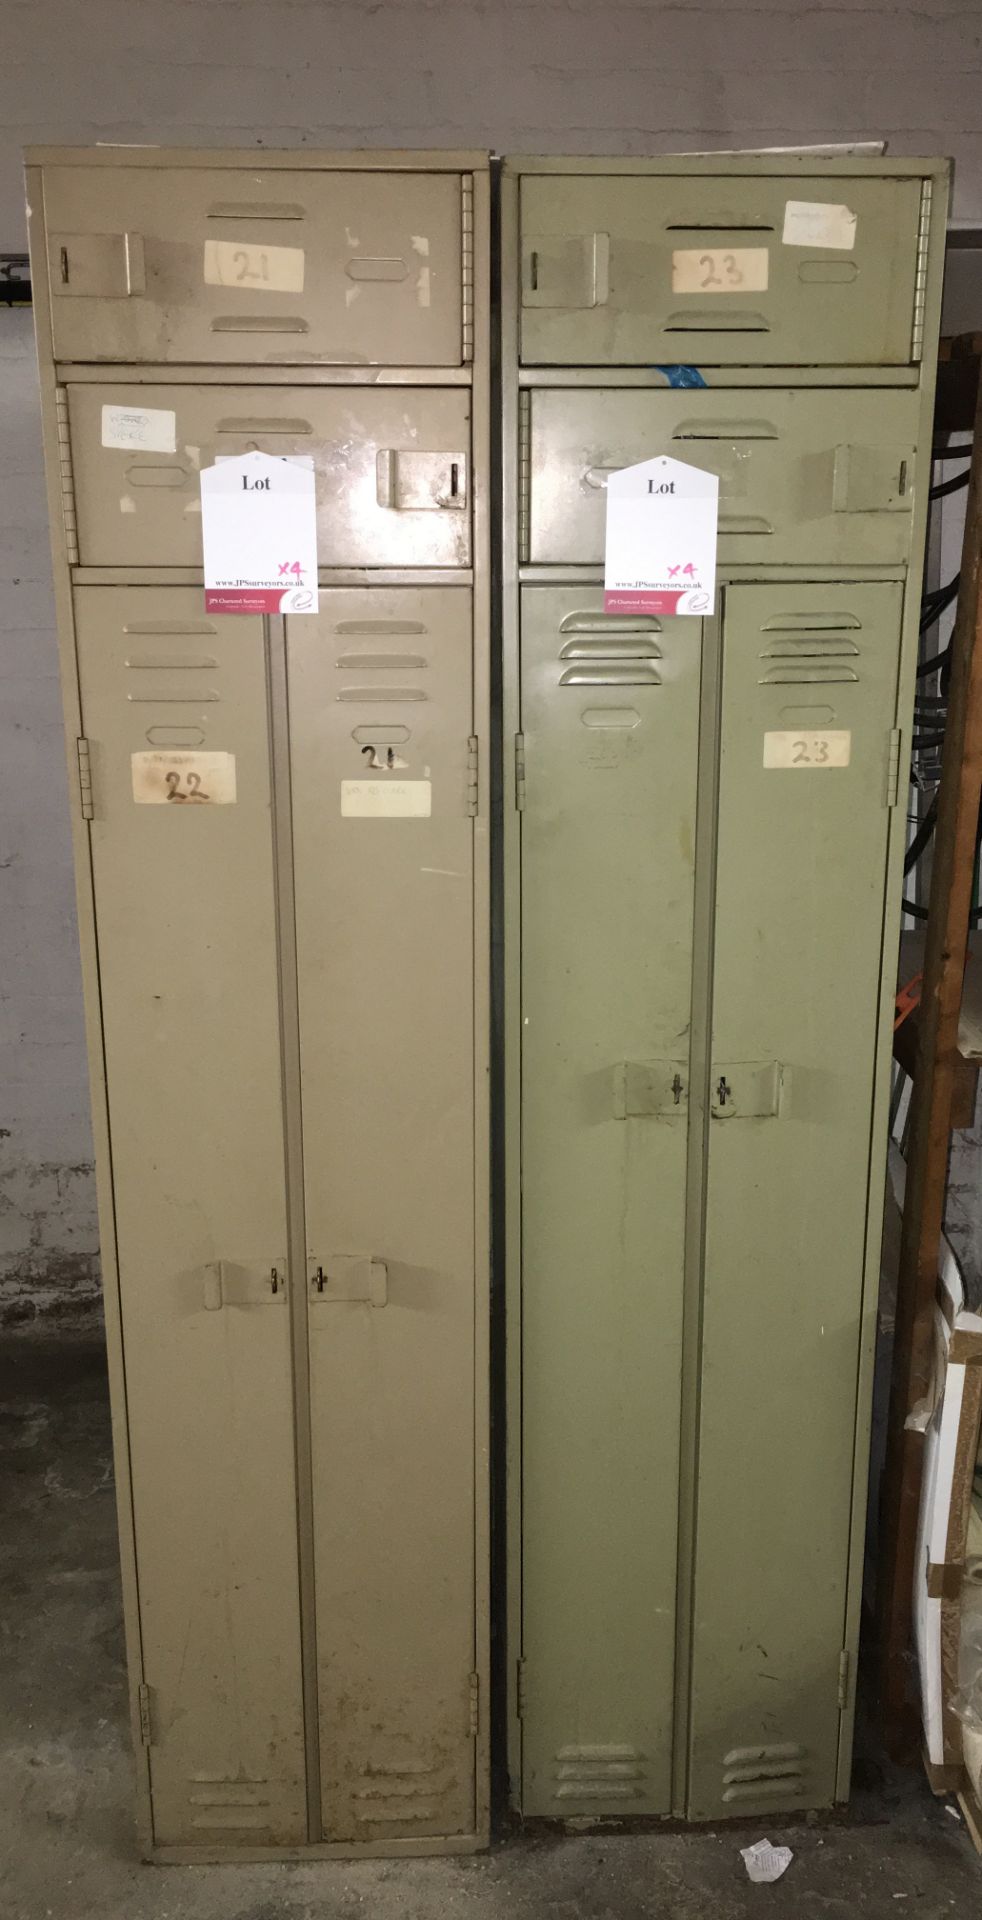 4 x Metal Double Locker Units w/ Overhead Drawers | No Keys